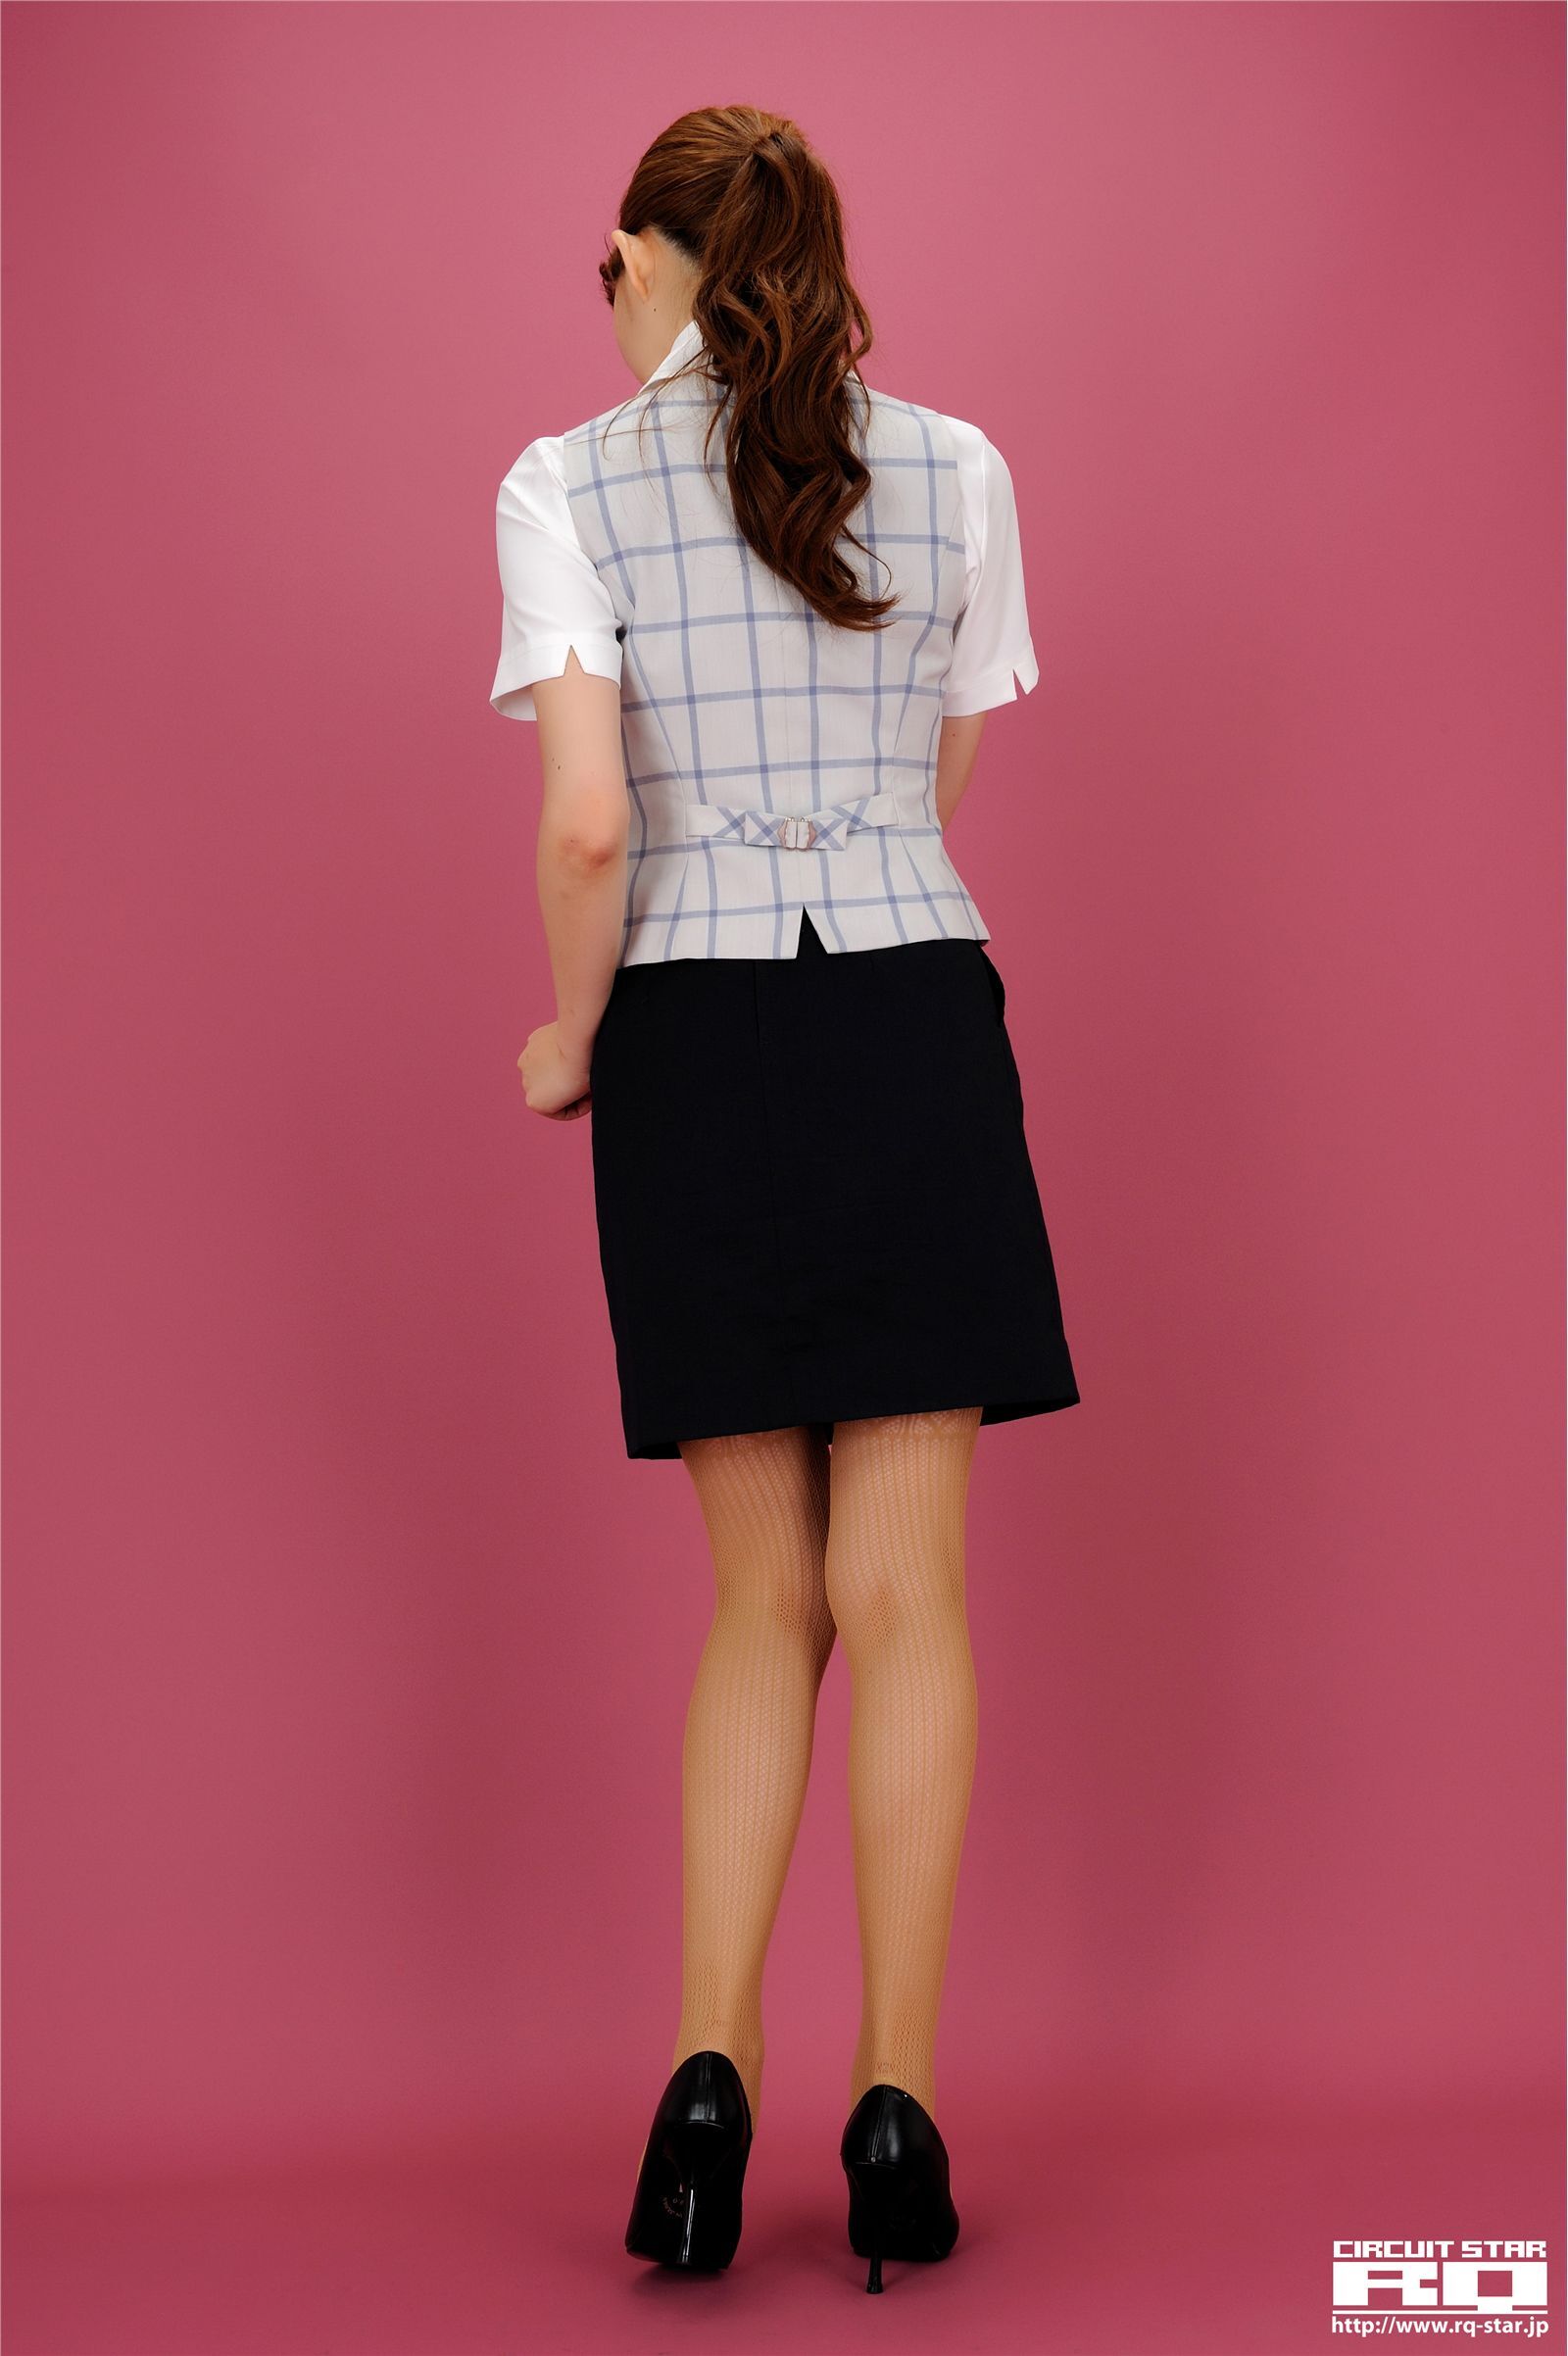 [rq-star] no.0347 Ryo Aihara office uniform girl